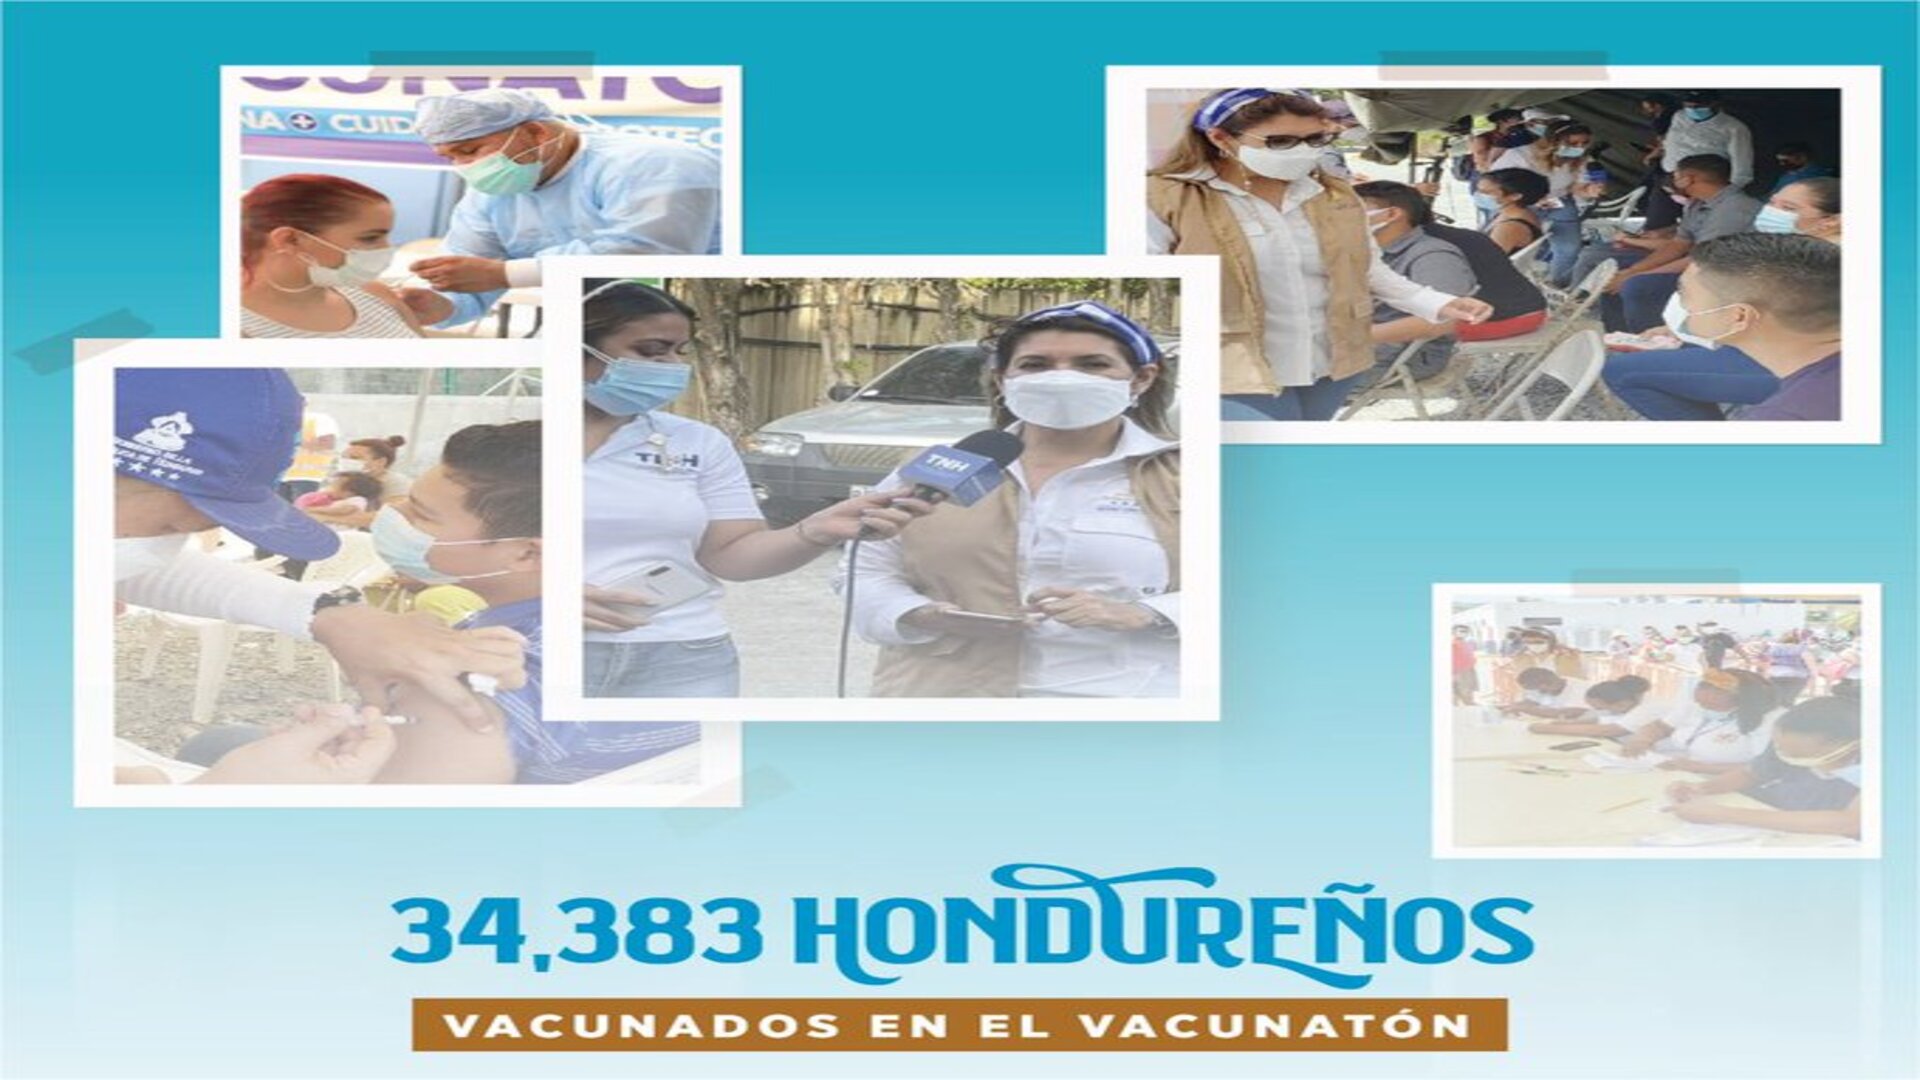 Vacunatón Honduras